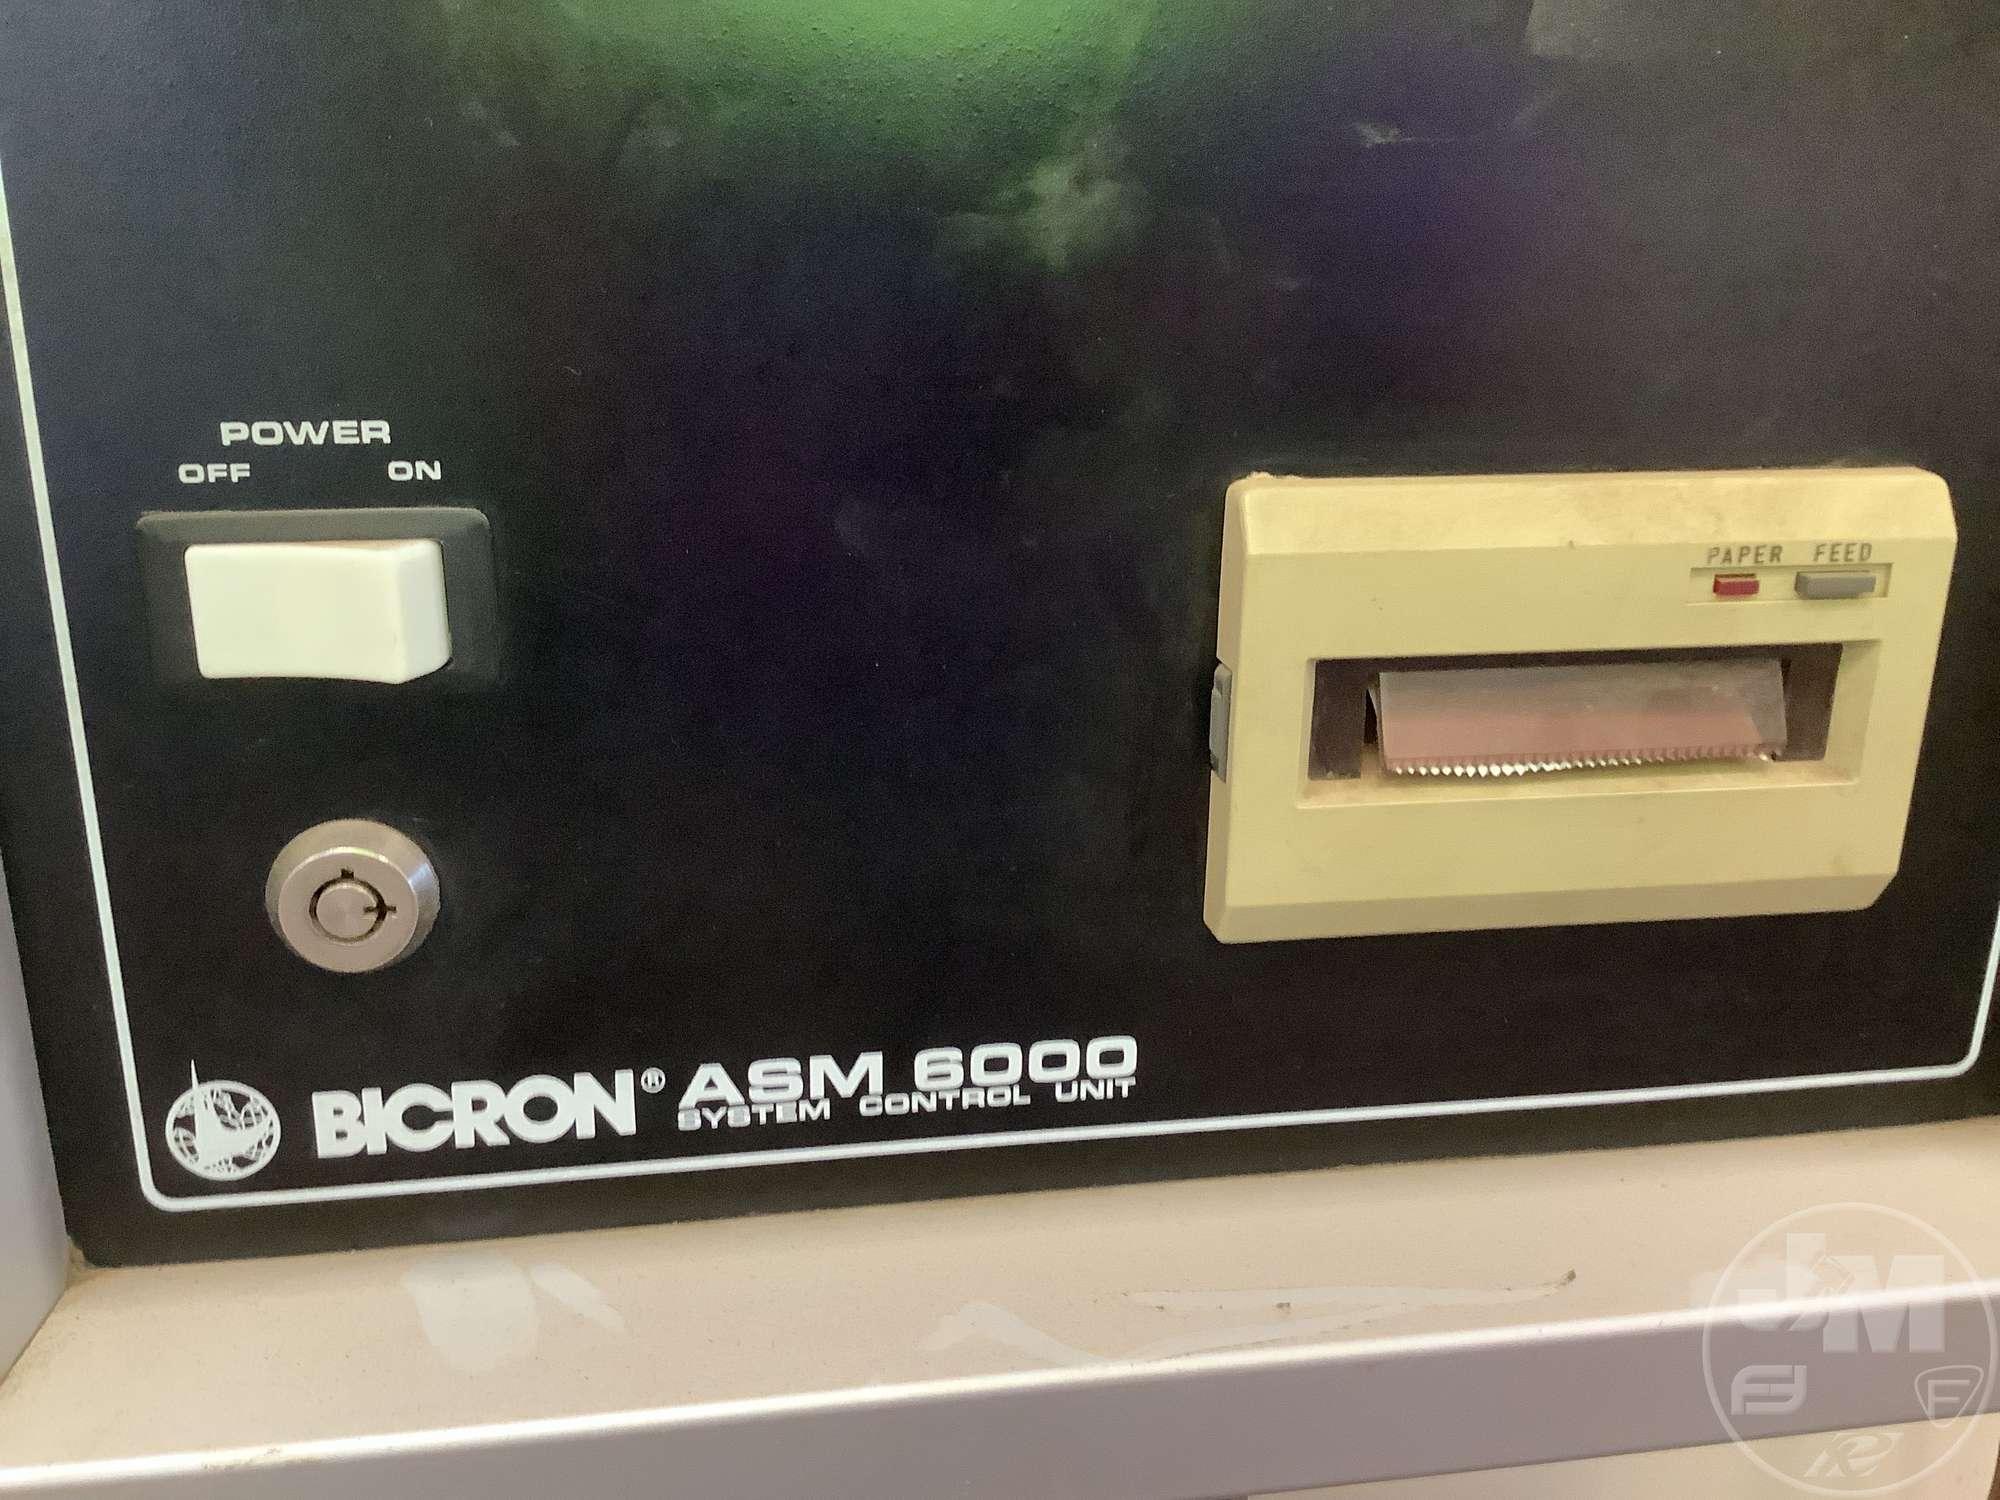 BICRON ASM 3000